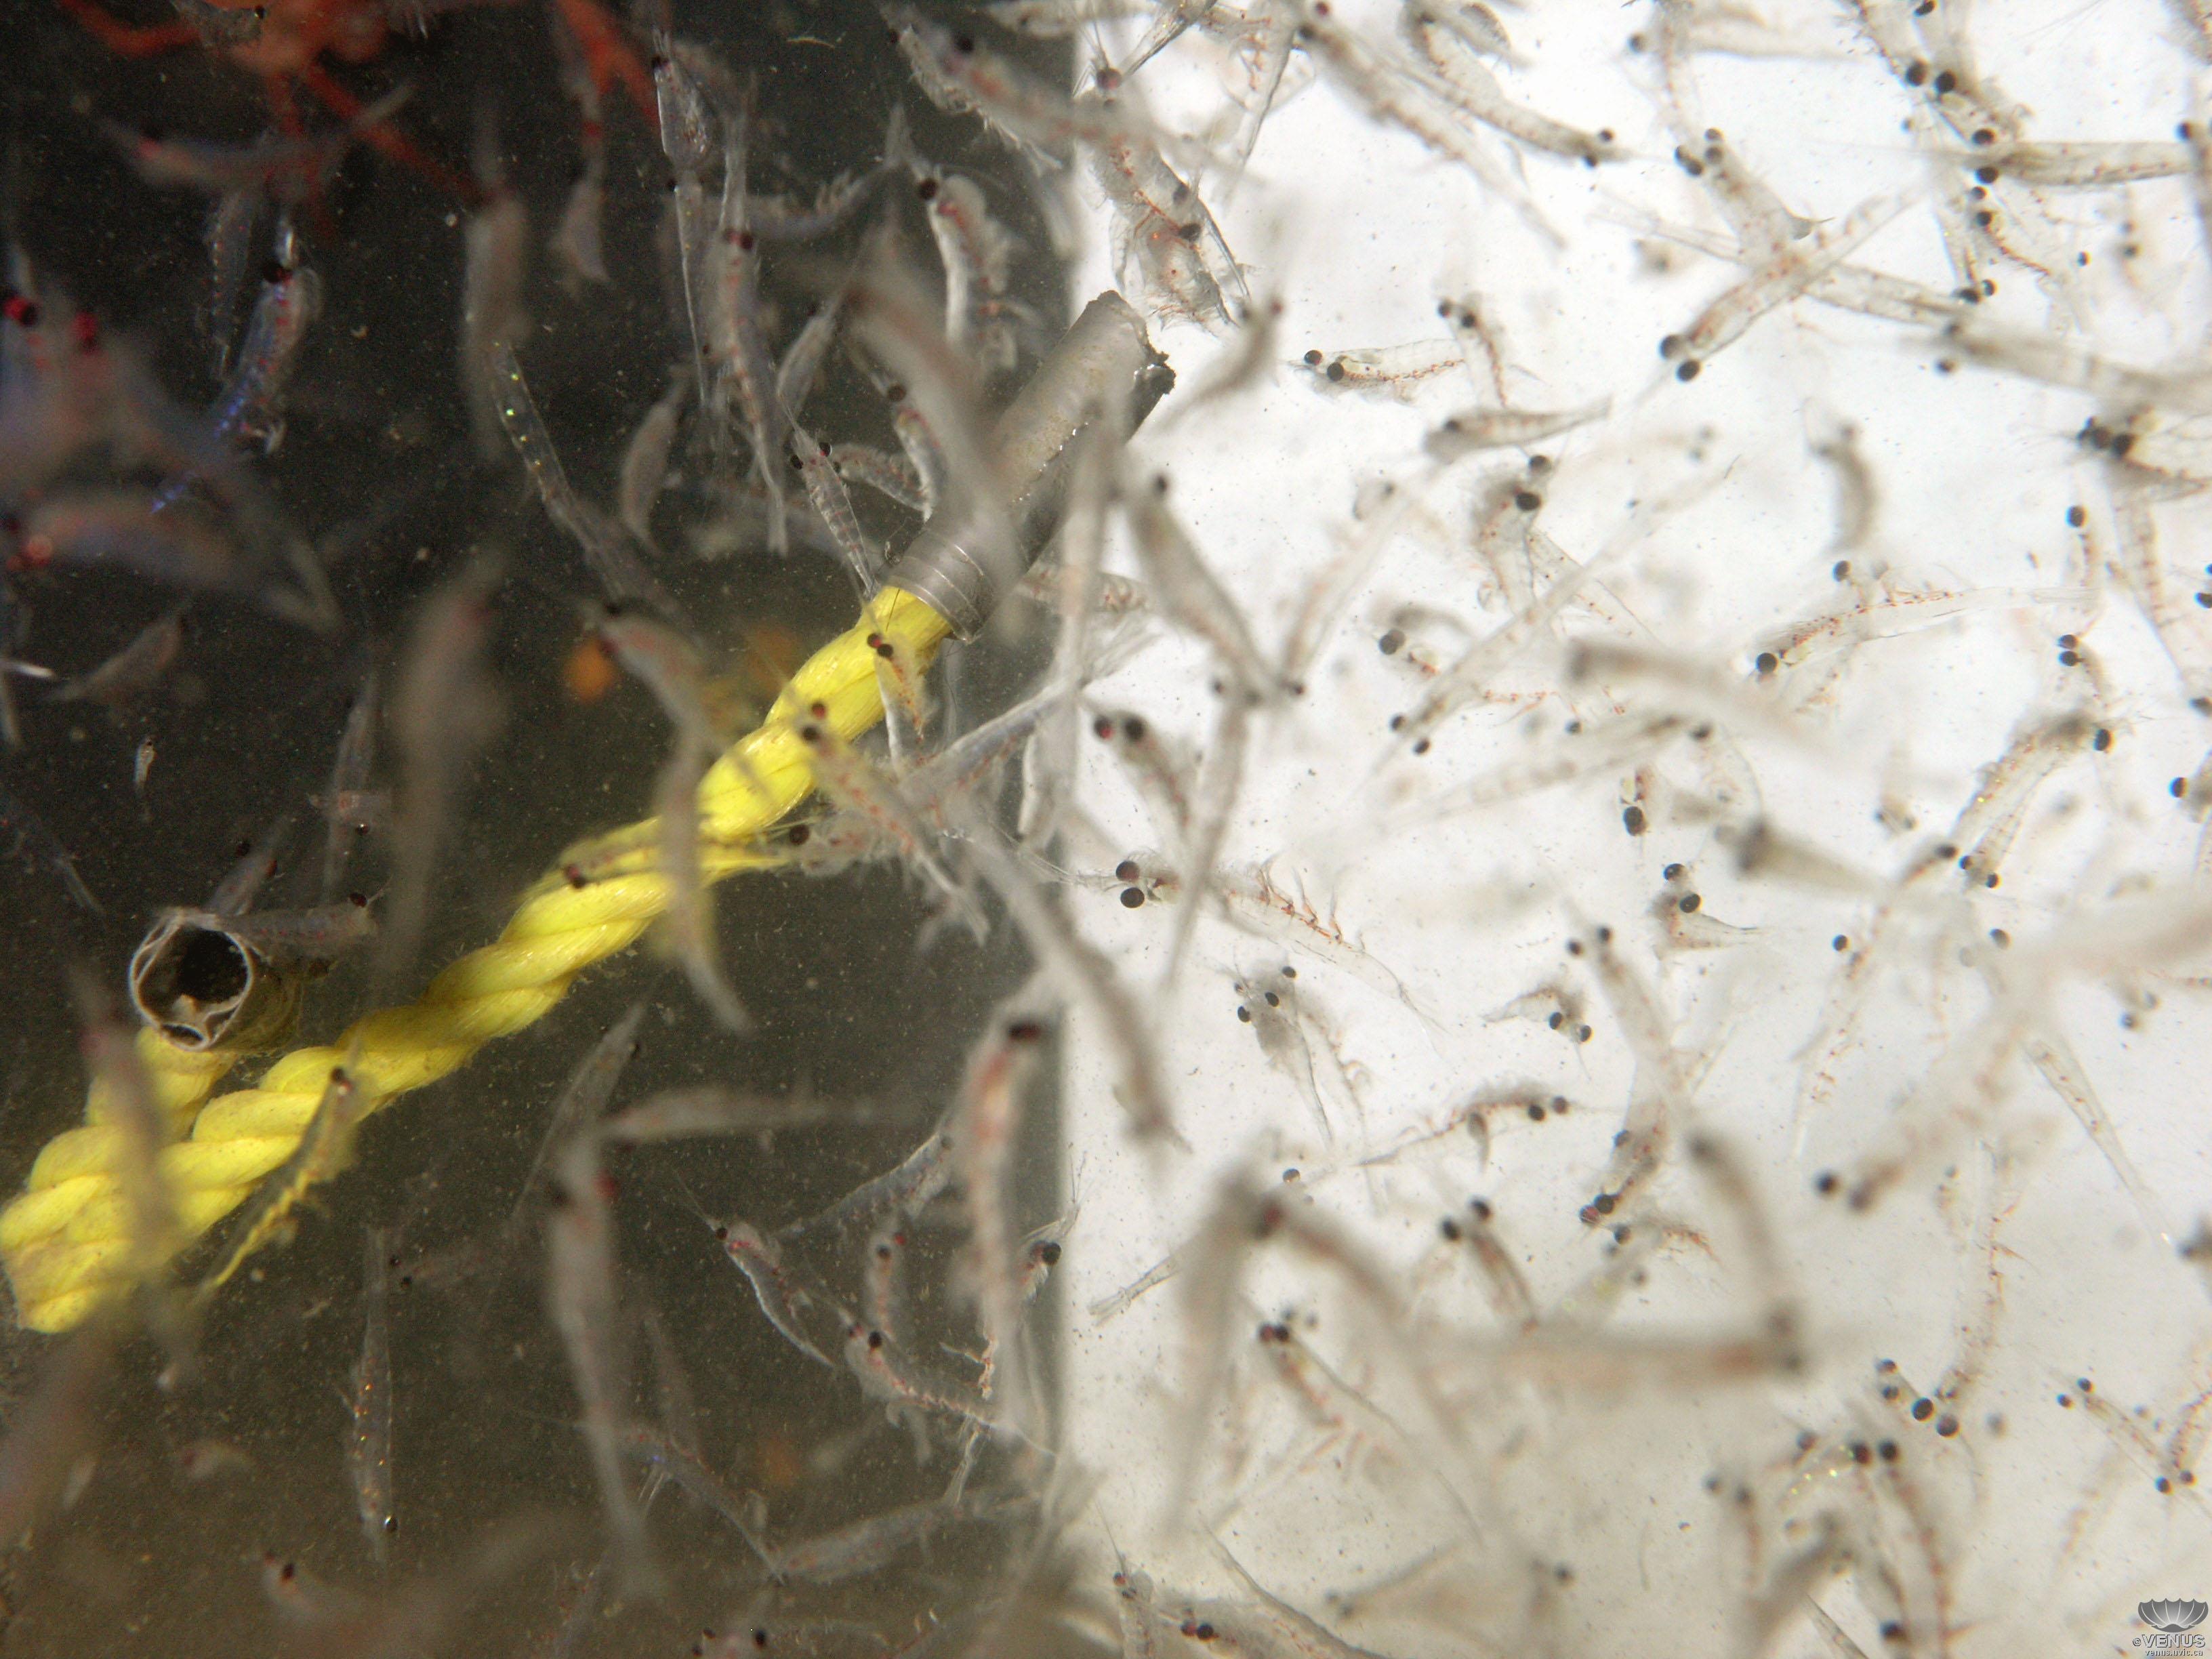 Zooplankton photo taken with VENUS CMAP camera CMAPCYCLOPS01 at 2010-01-01 09:49:56 UTC.